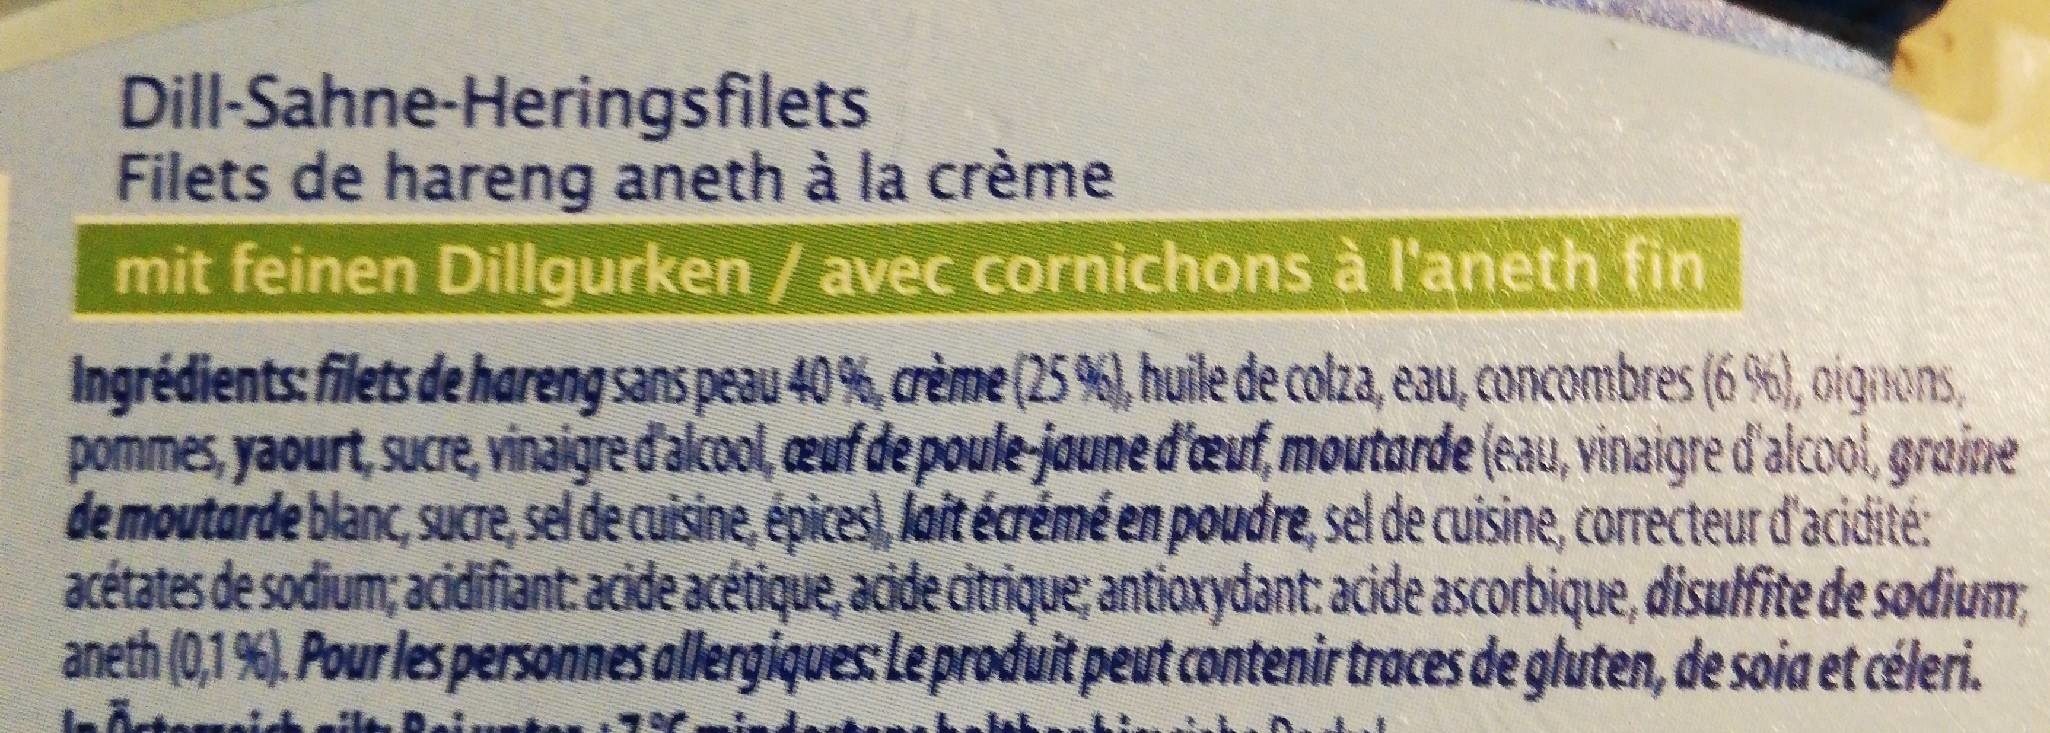 Filets de hareng aneth à la crème - Ingredienti - fr